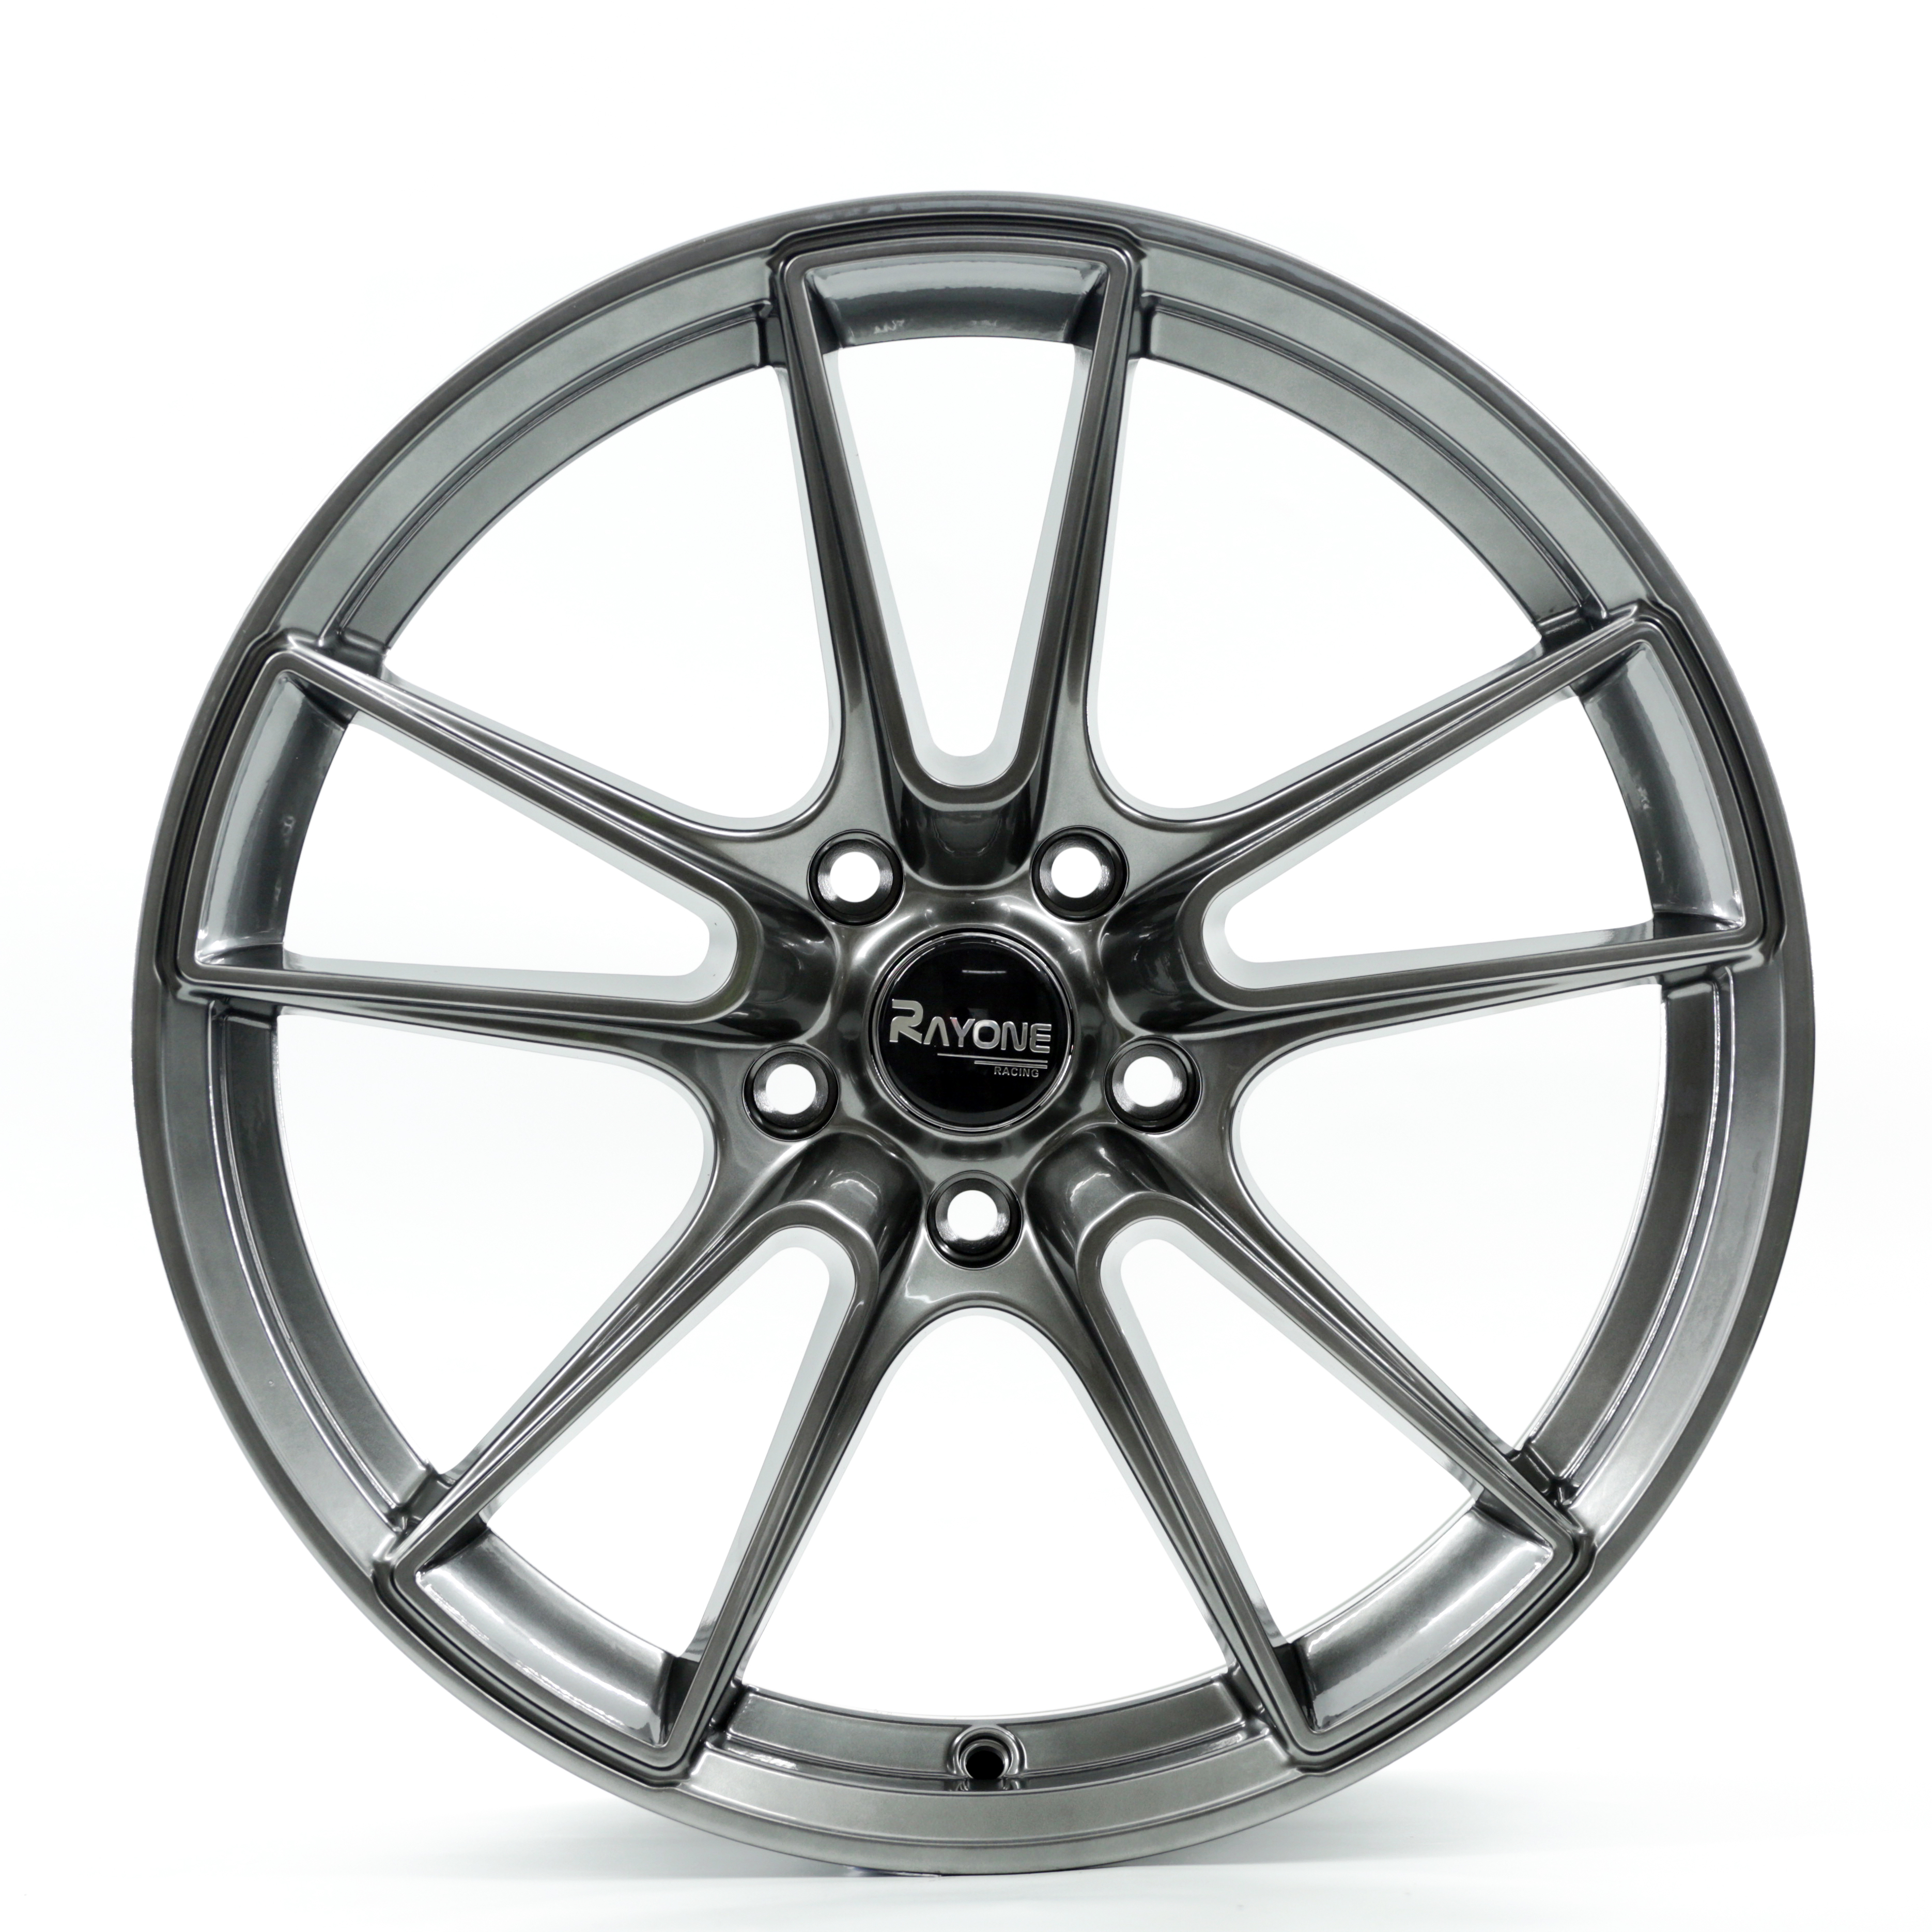 Rayone KS Forged KS001 High Performance Wheels 18×8.0 For Tesla/Audi/Mercedes/BMW/Maserati